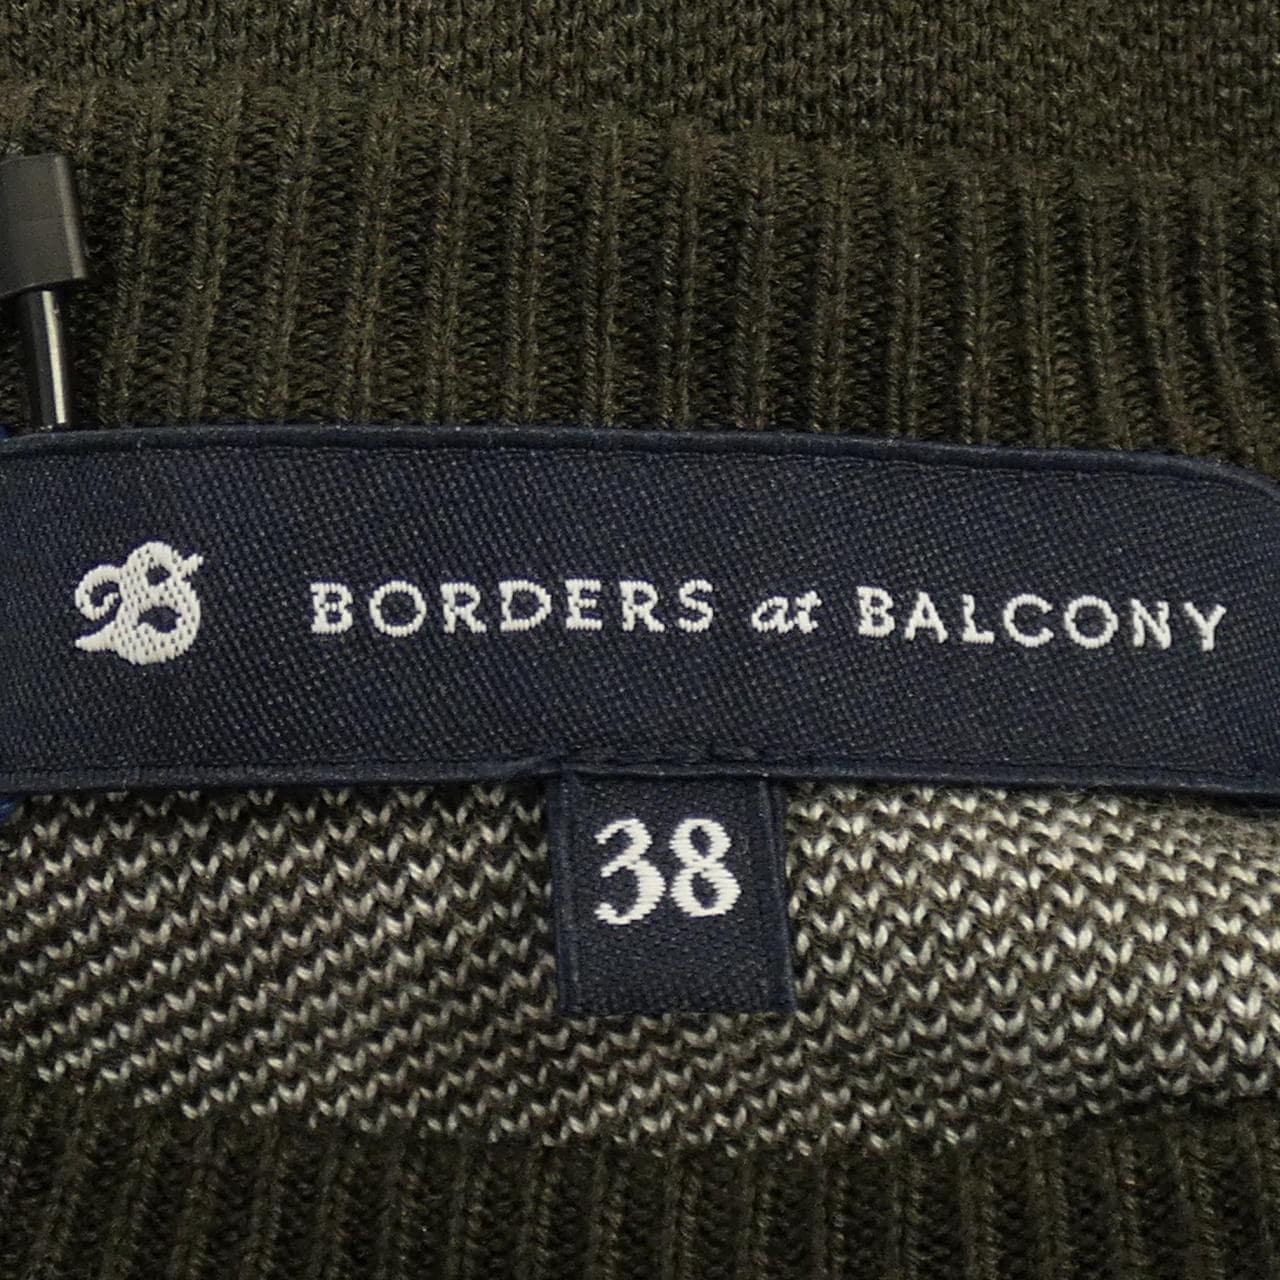 BORDER@BORDERS at BALCONY針織衫